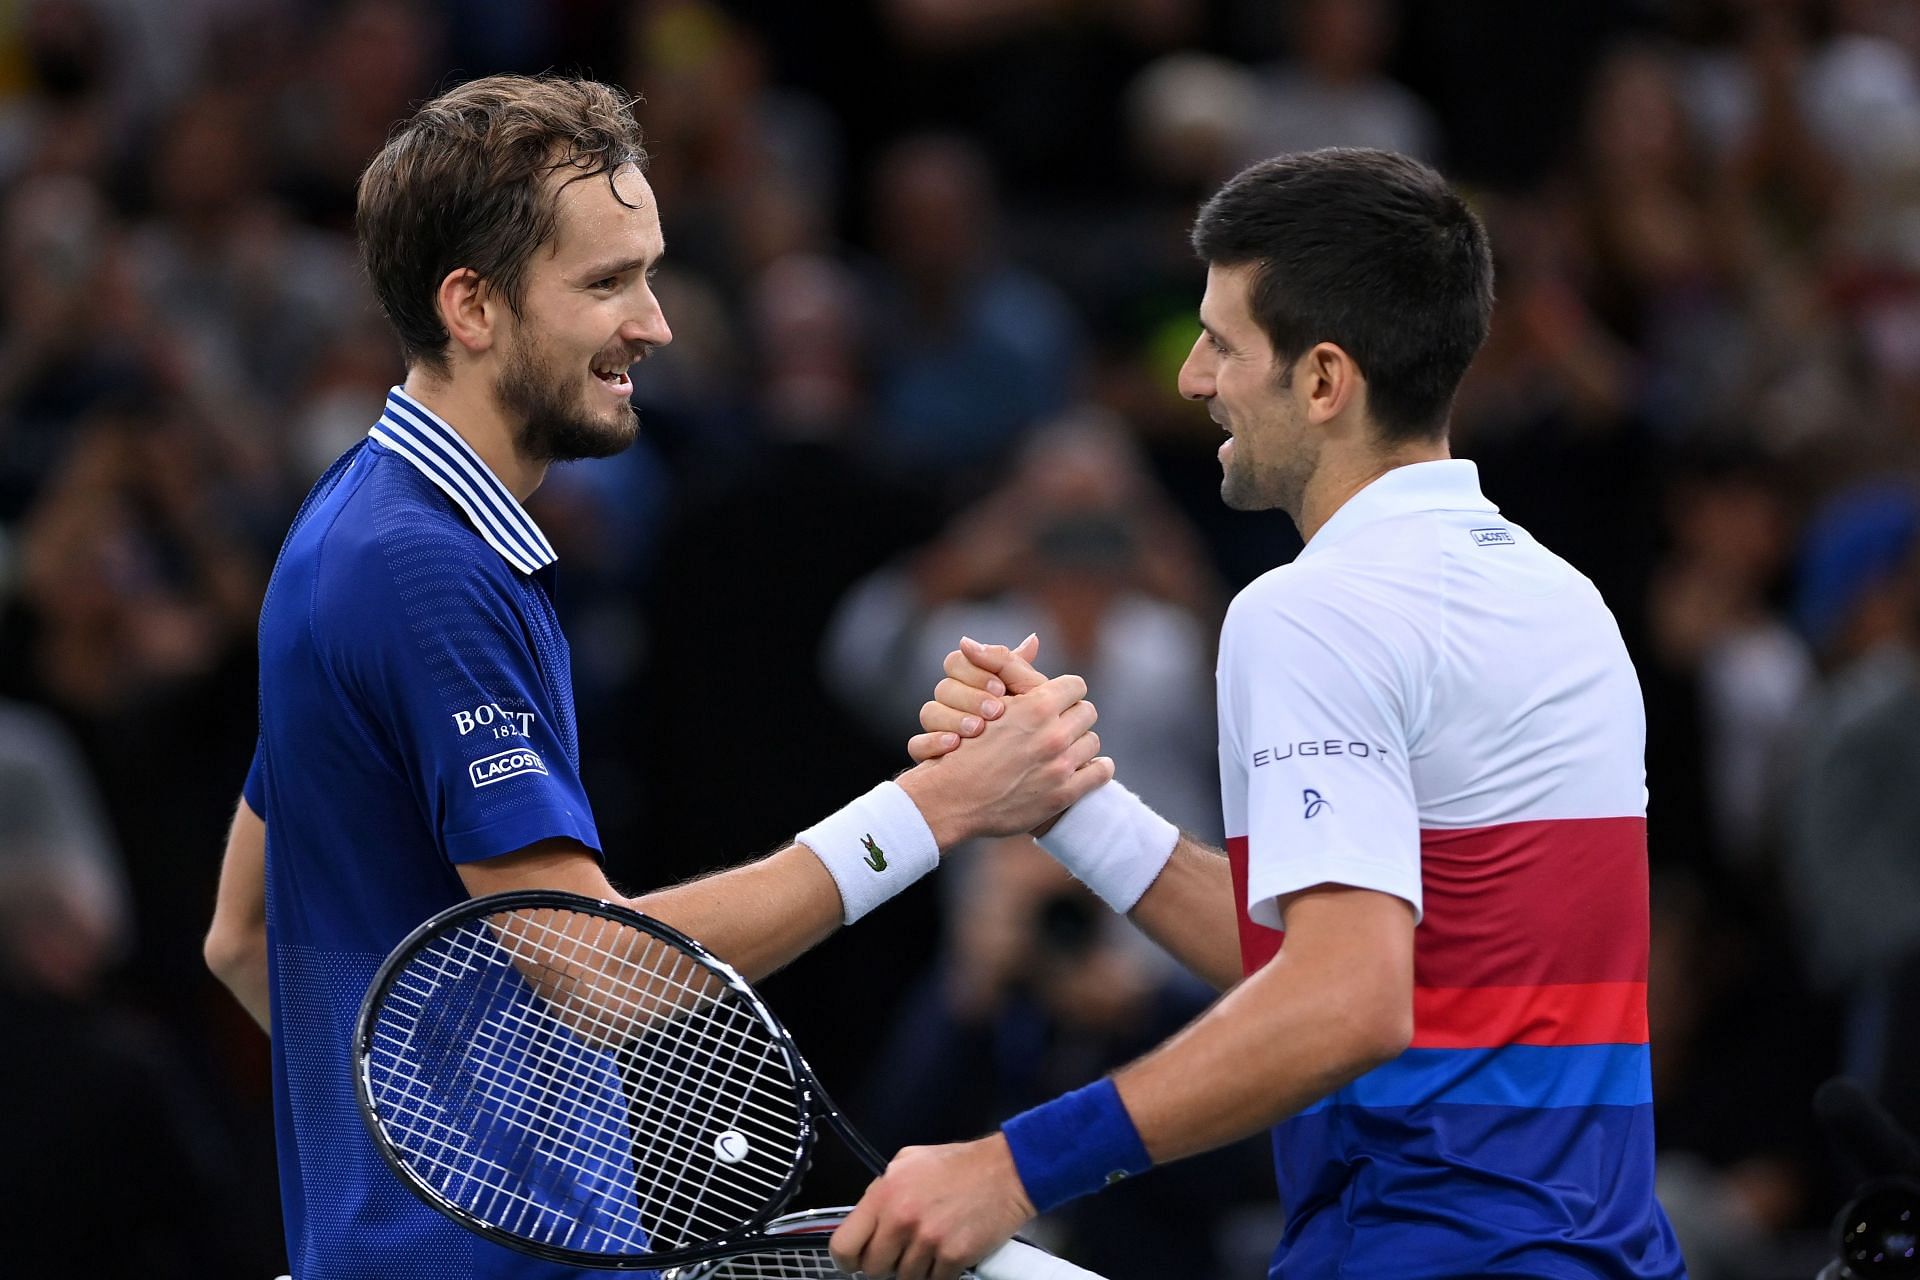 Daniil Medvedev congratulates Novak Djokovic after the match